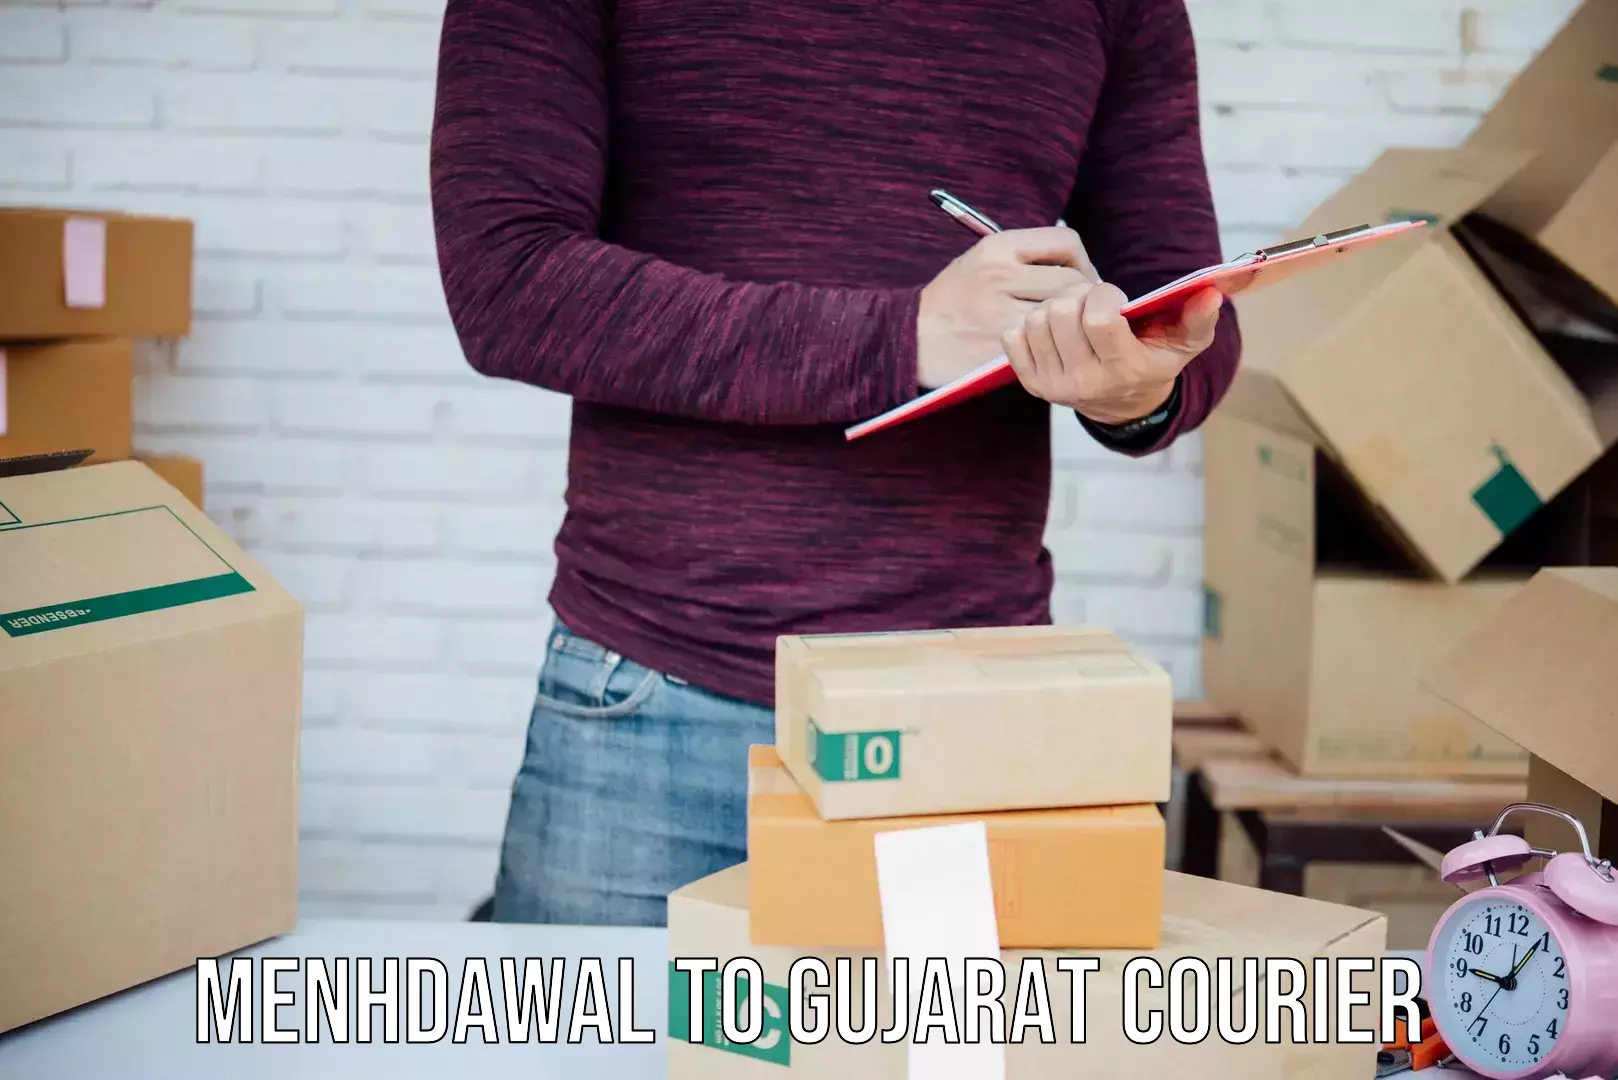 On-demand shipping options Menhdawal to Gujarat